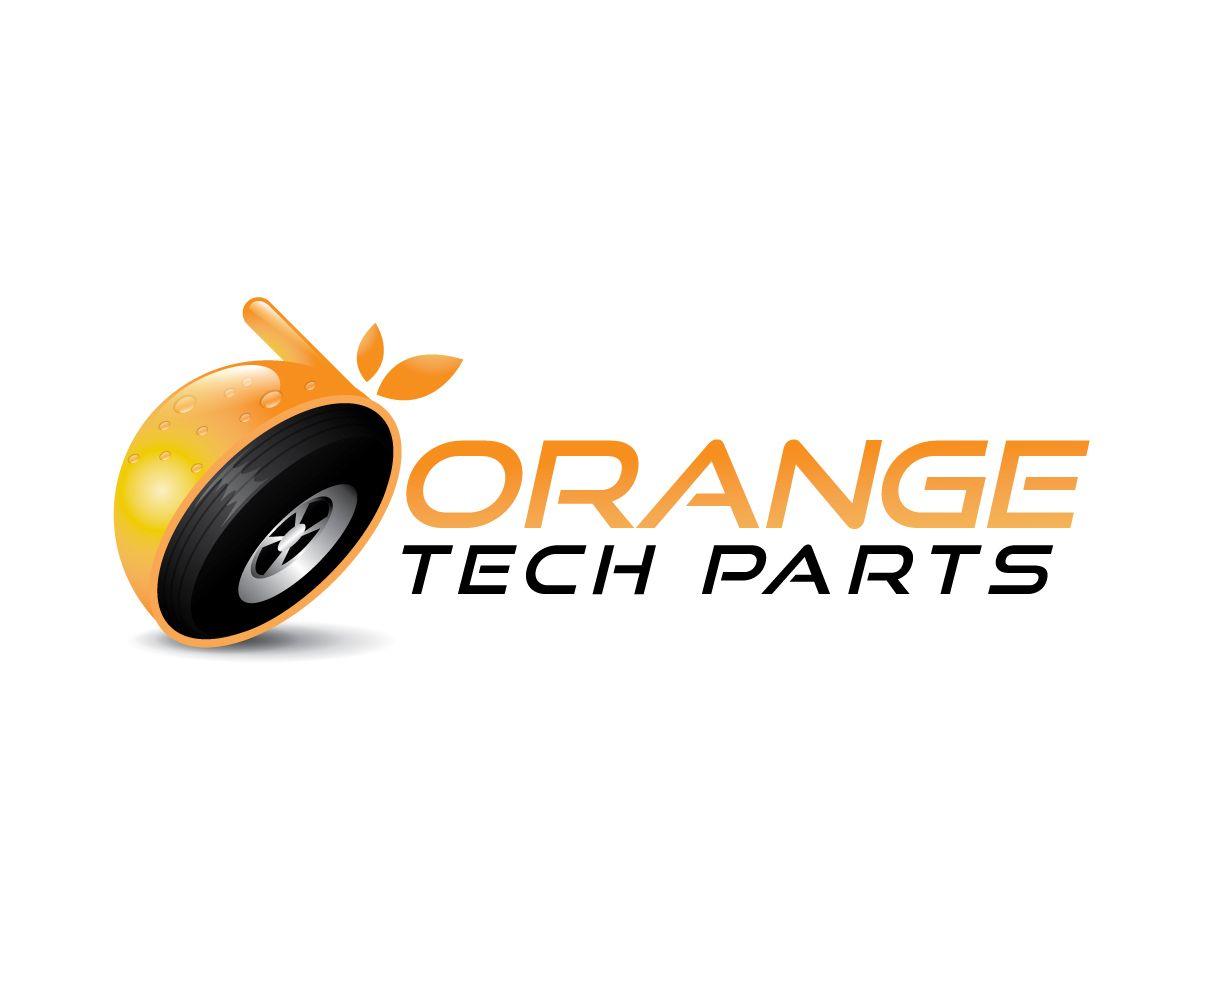 Orange Phone Logo - Cell Phone Logo Design for Orange Tech Parts by Graphicsexpert ...